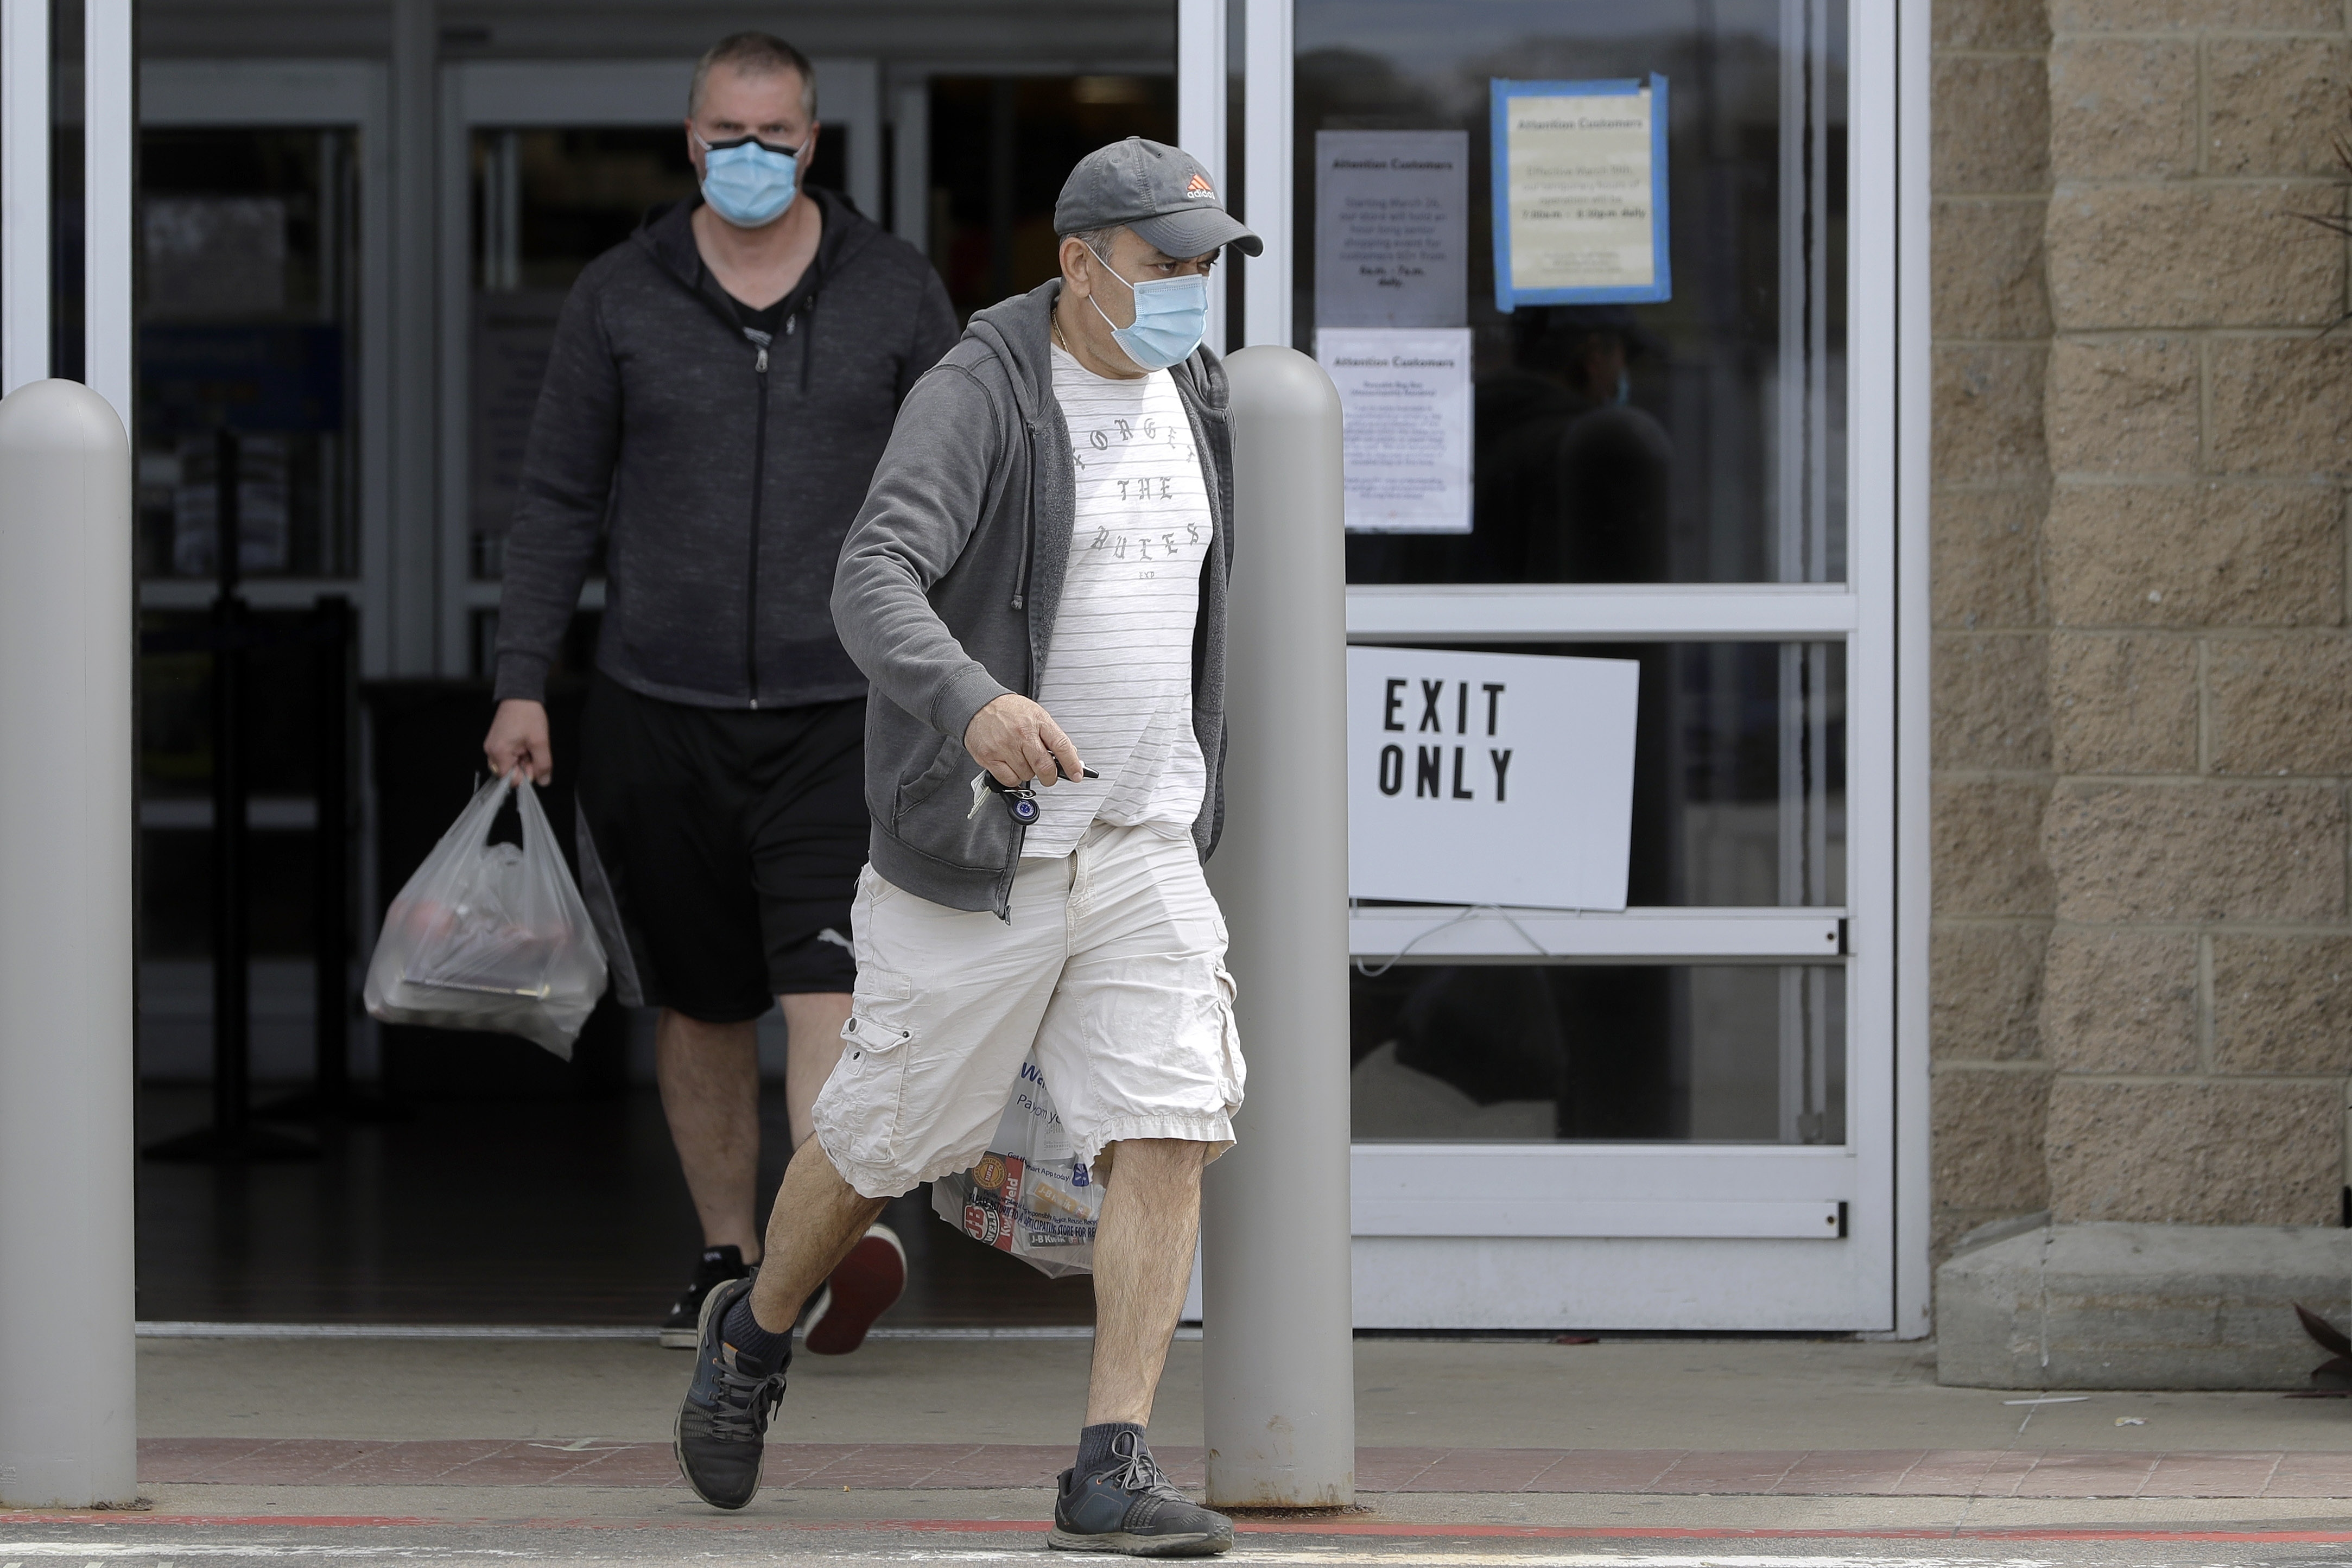 Worcester Walmart Shut Down Over Multiple COVID-19 Cases – Footwear News